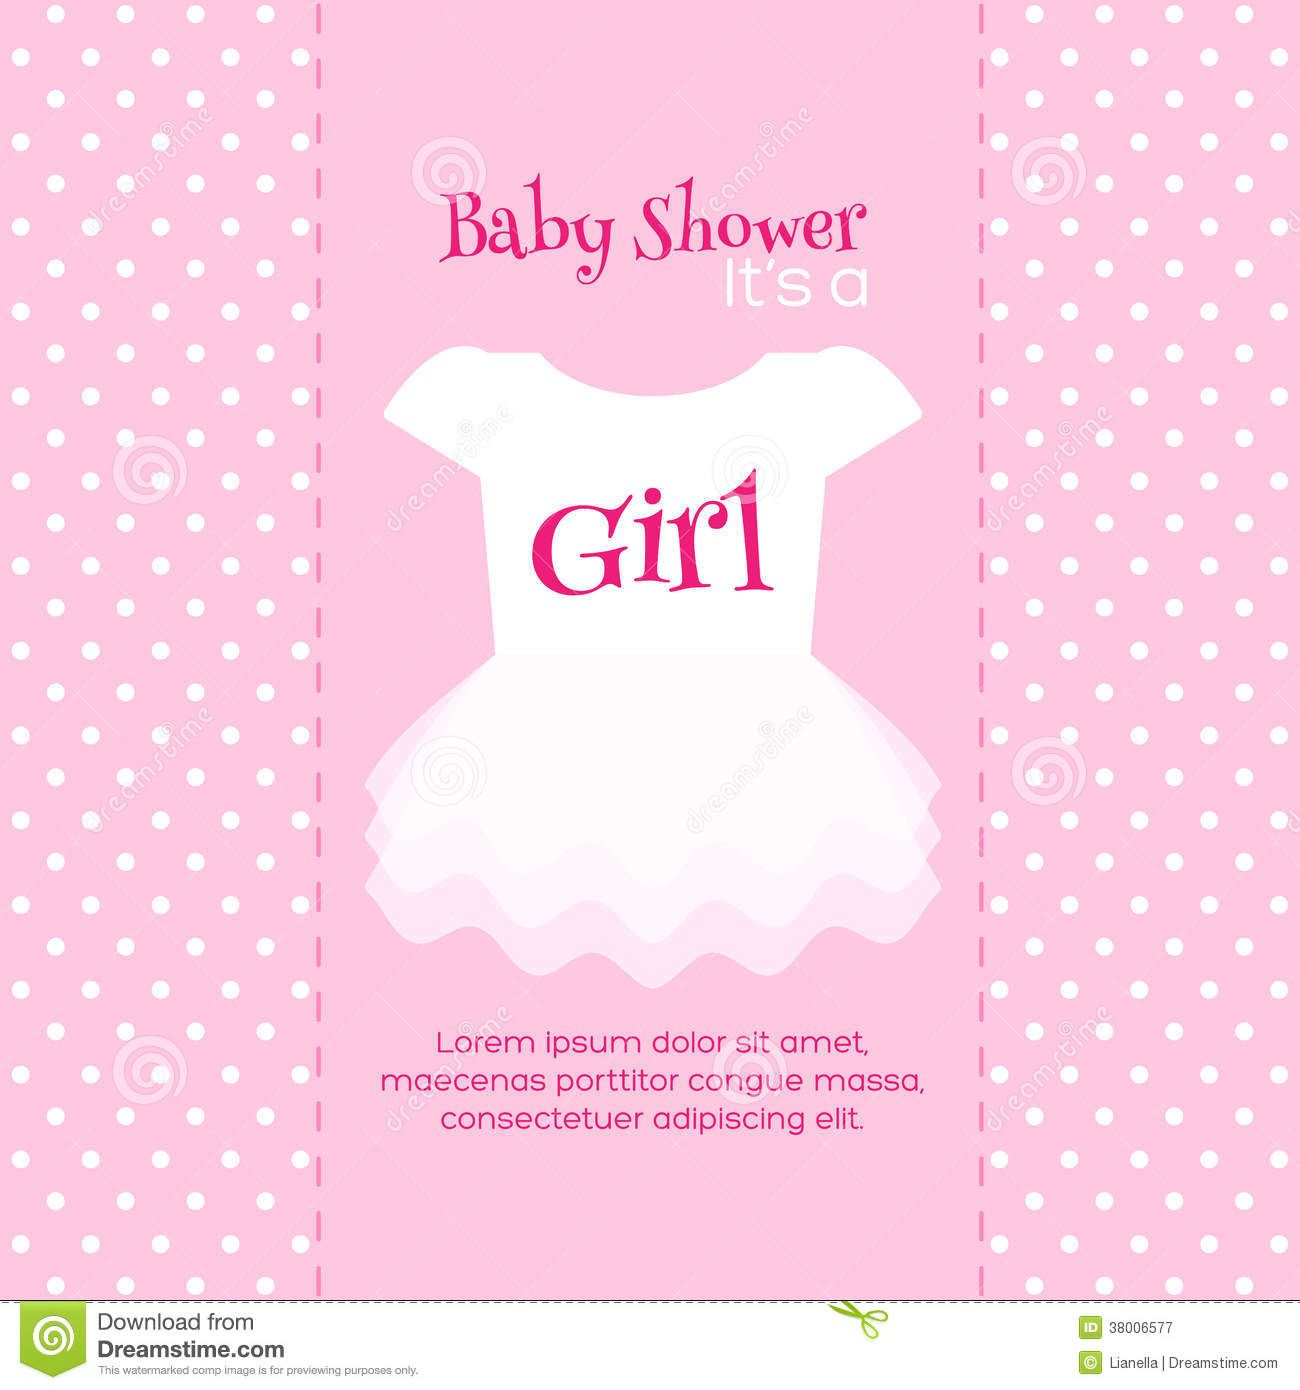 Design : Free Printable Baby Shower Invitations For Girls | Ckylares - Free Printable Baby Shower Invitation Maker